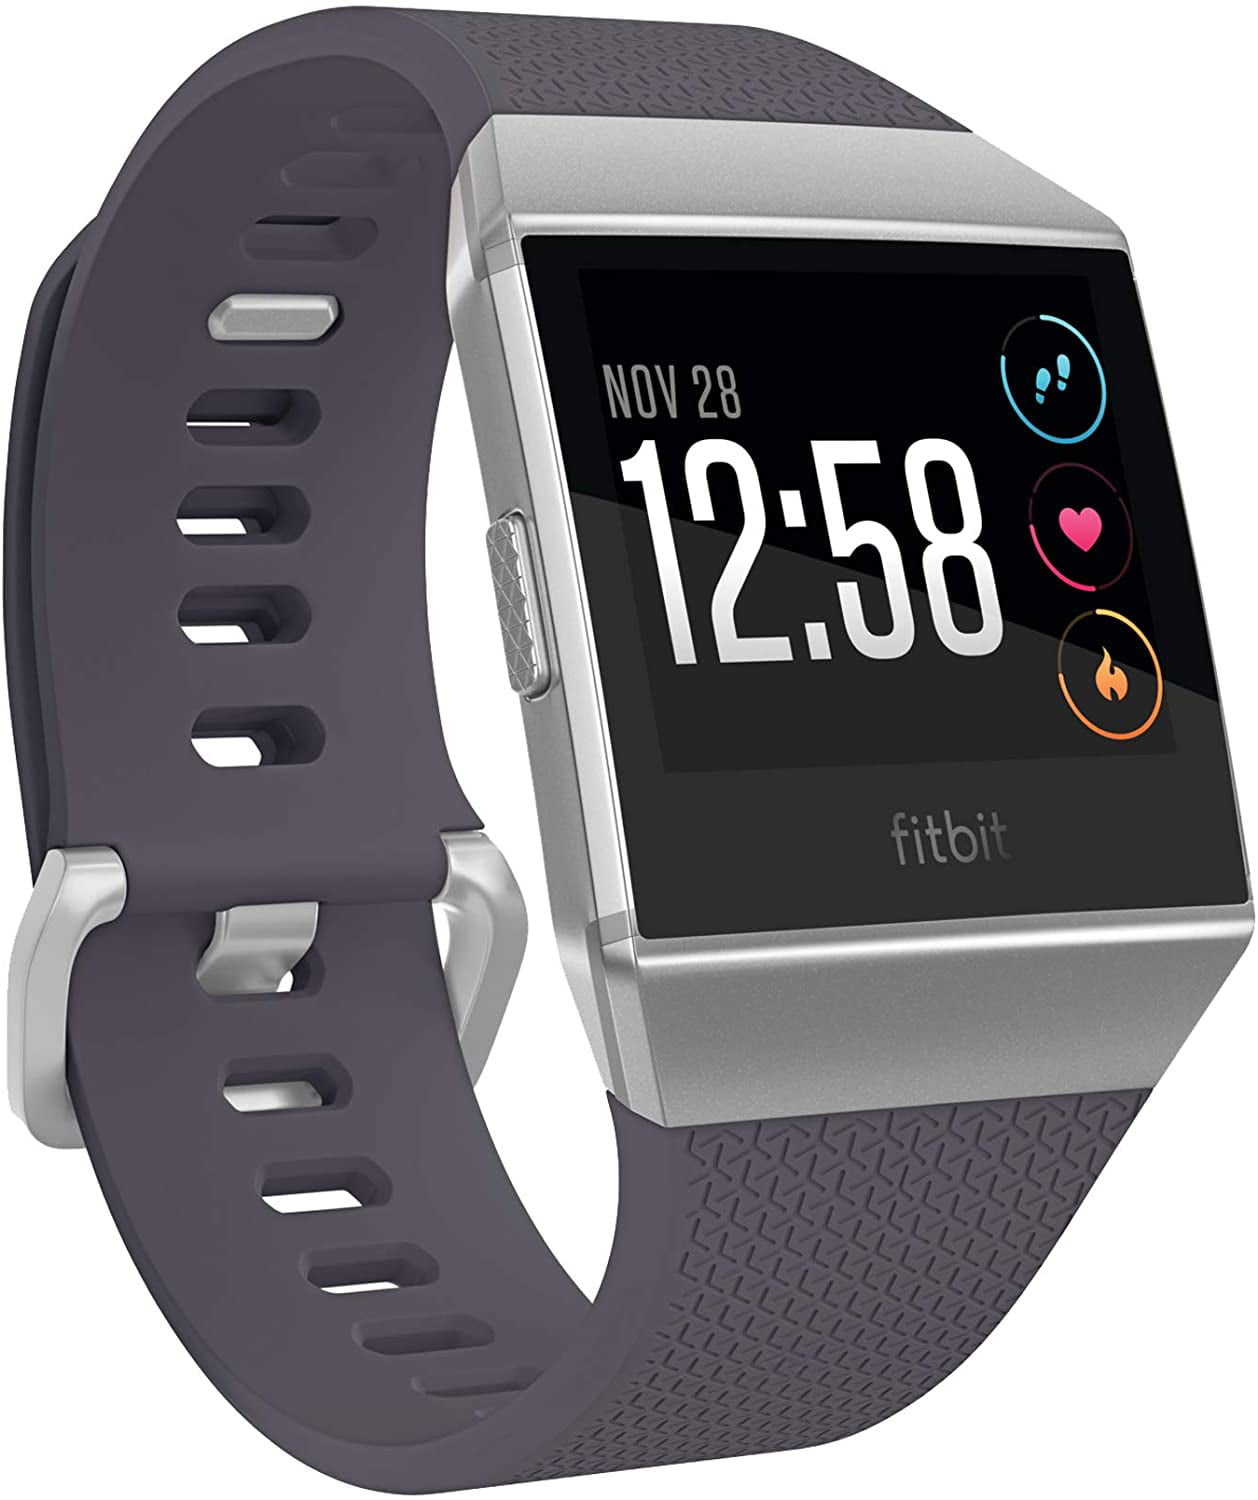 Genuine New 2019 Fitbit Ionic Wrist GPS Smartwatch Bluetooth Activity Tracker US 